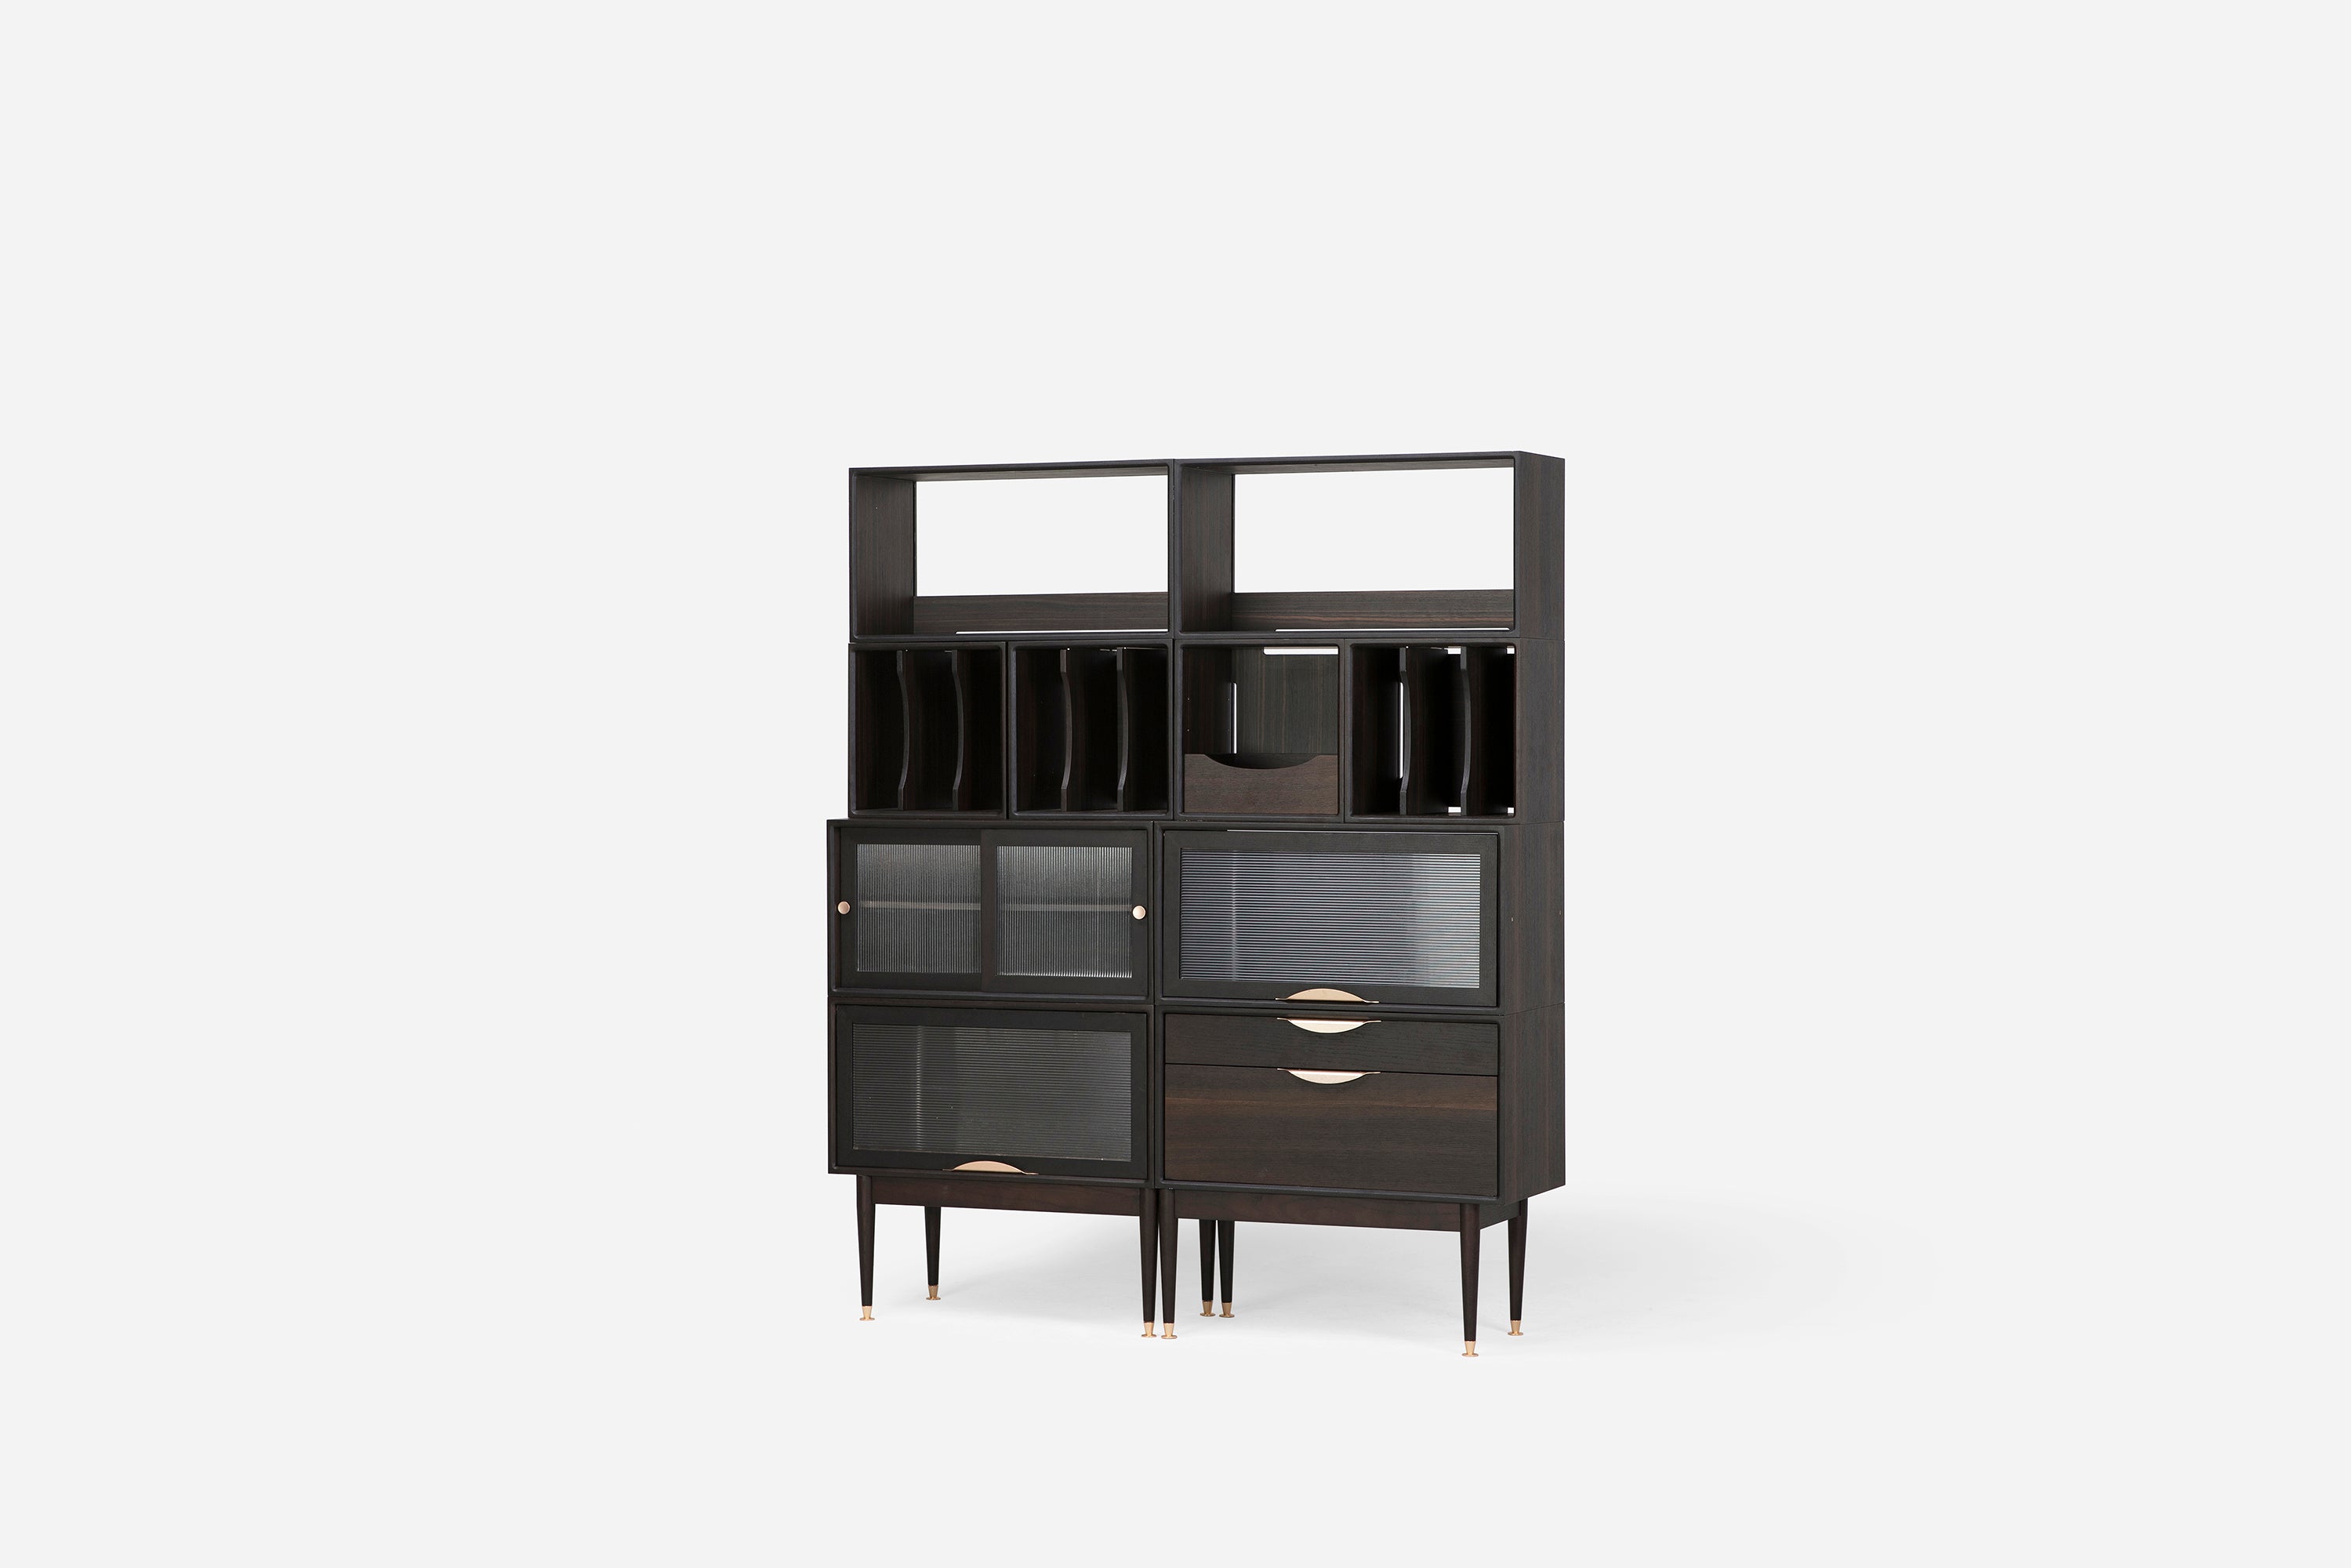 INFINITY CABINETS (BOOKSHELF) Bookshelf Ziinlife Modern Design Furniture Hong Kong 